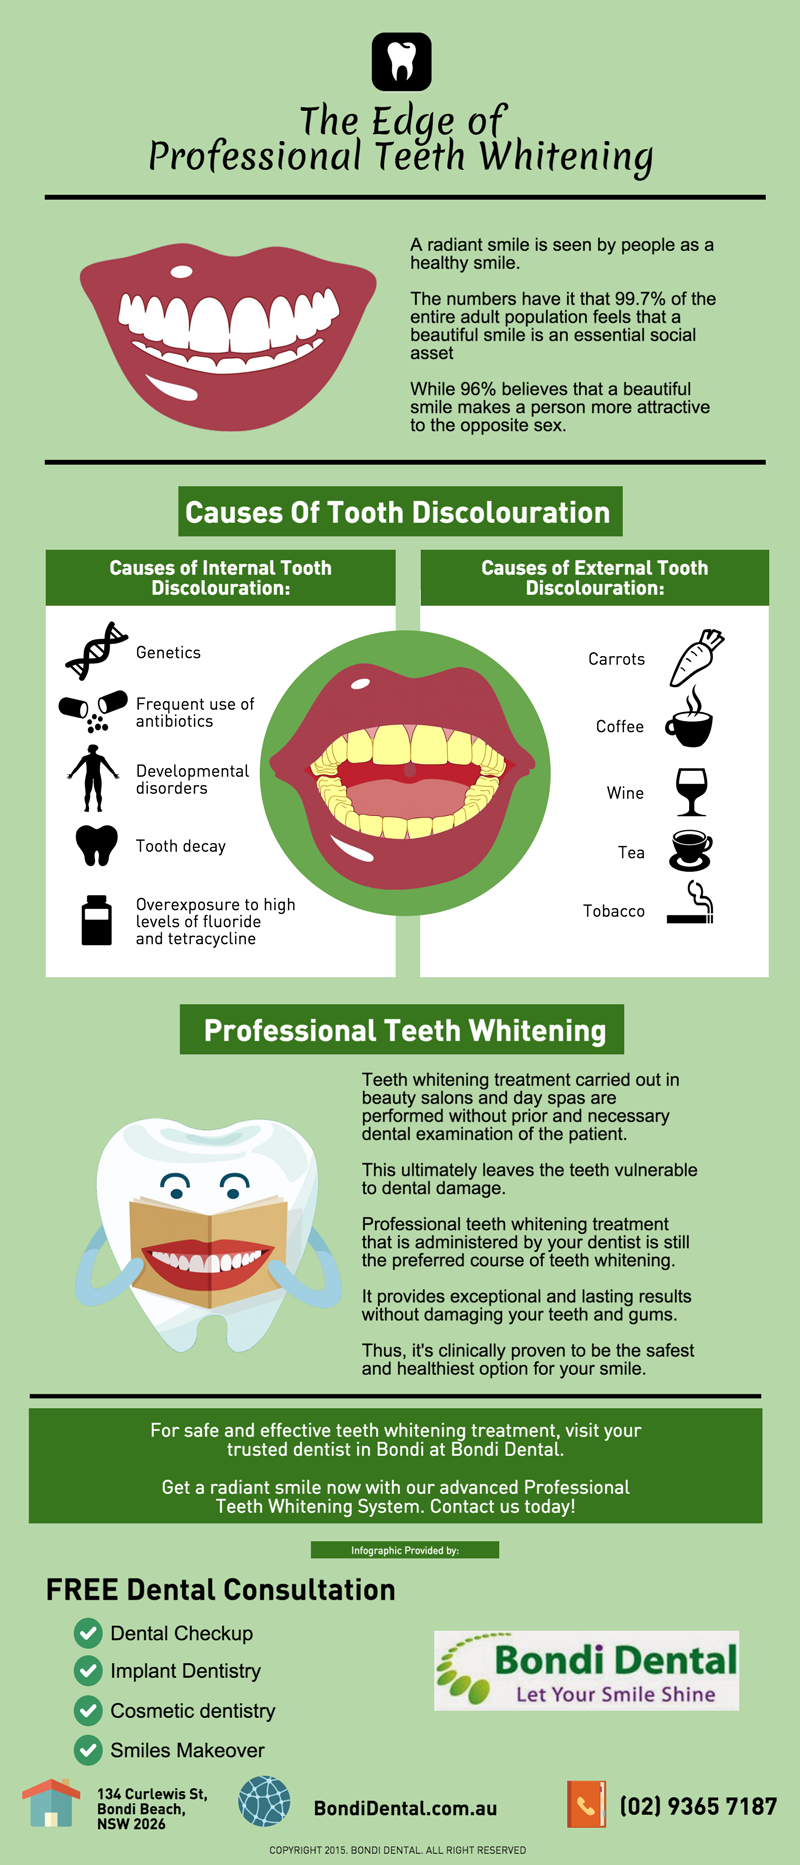 The Edge of Professional Teeth Whitening | Bondi Dental